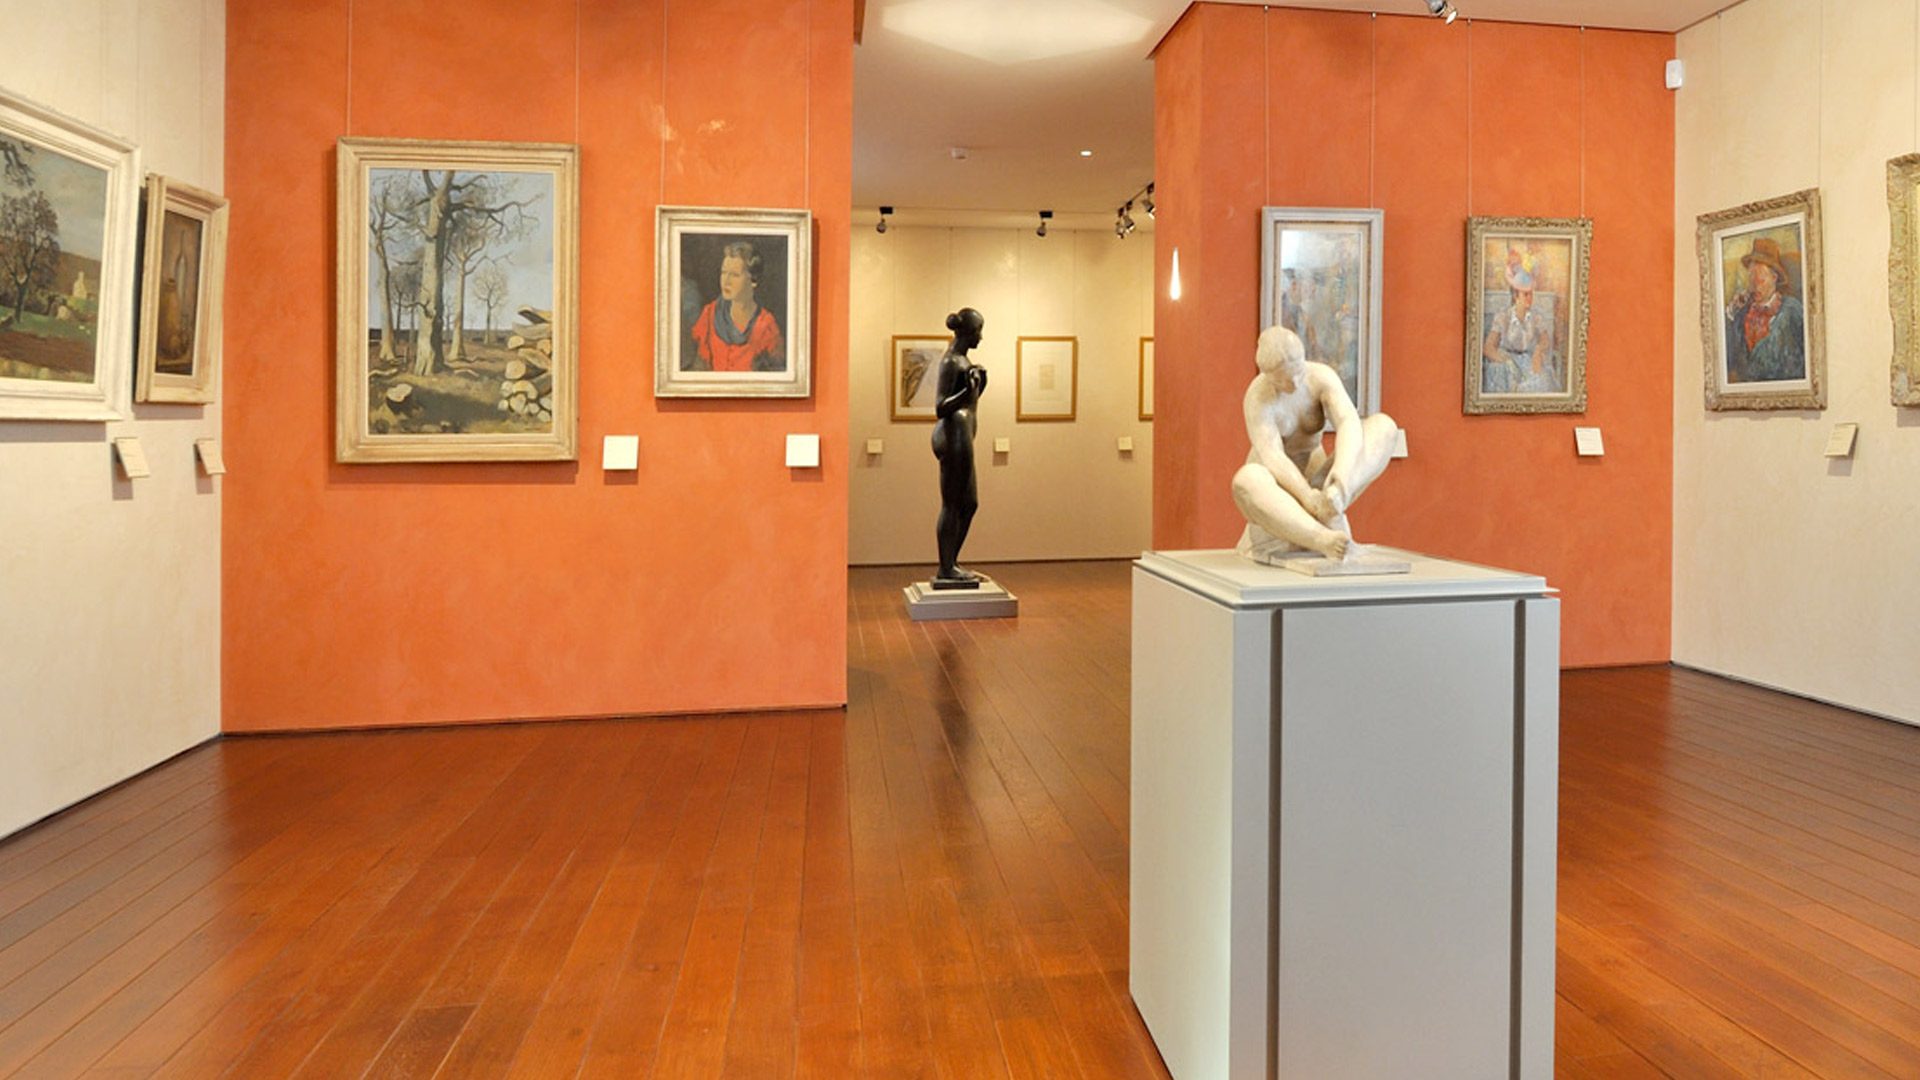 Albi il museo Toulouse-Lautrec e le sue gallerie d'arte moderna: i contemporanei di Toulouse-Lautrec